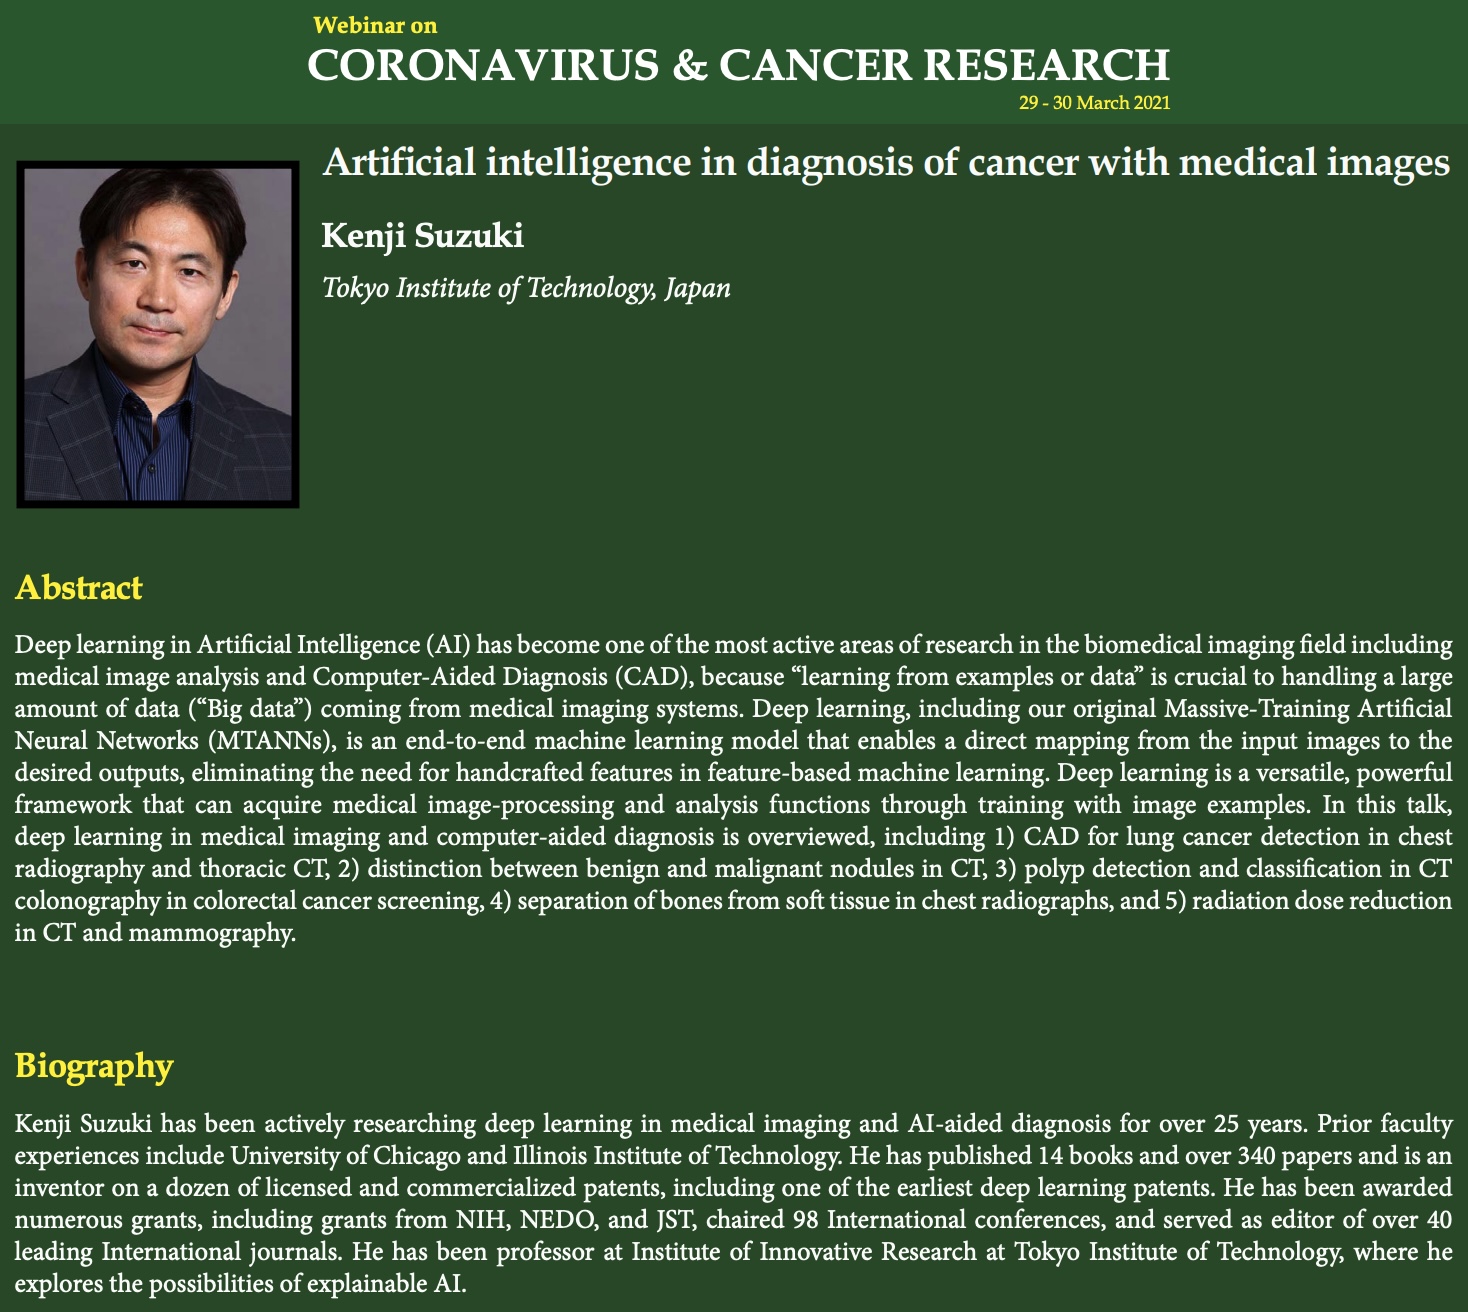 Dr. Suzuki gives a talk at Webinar on Cancer Research